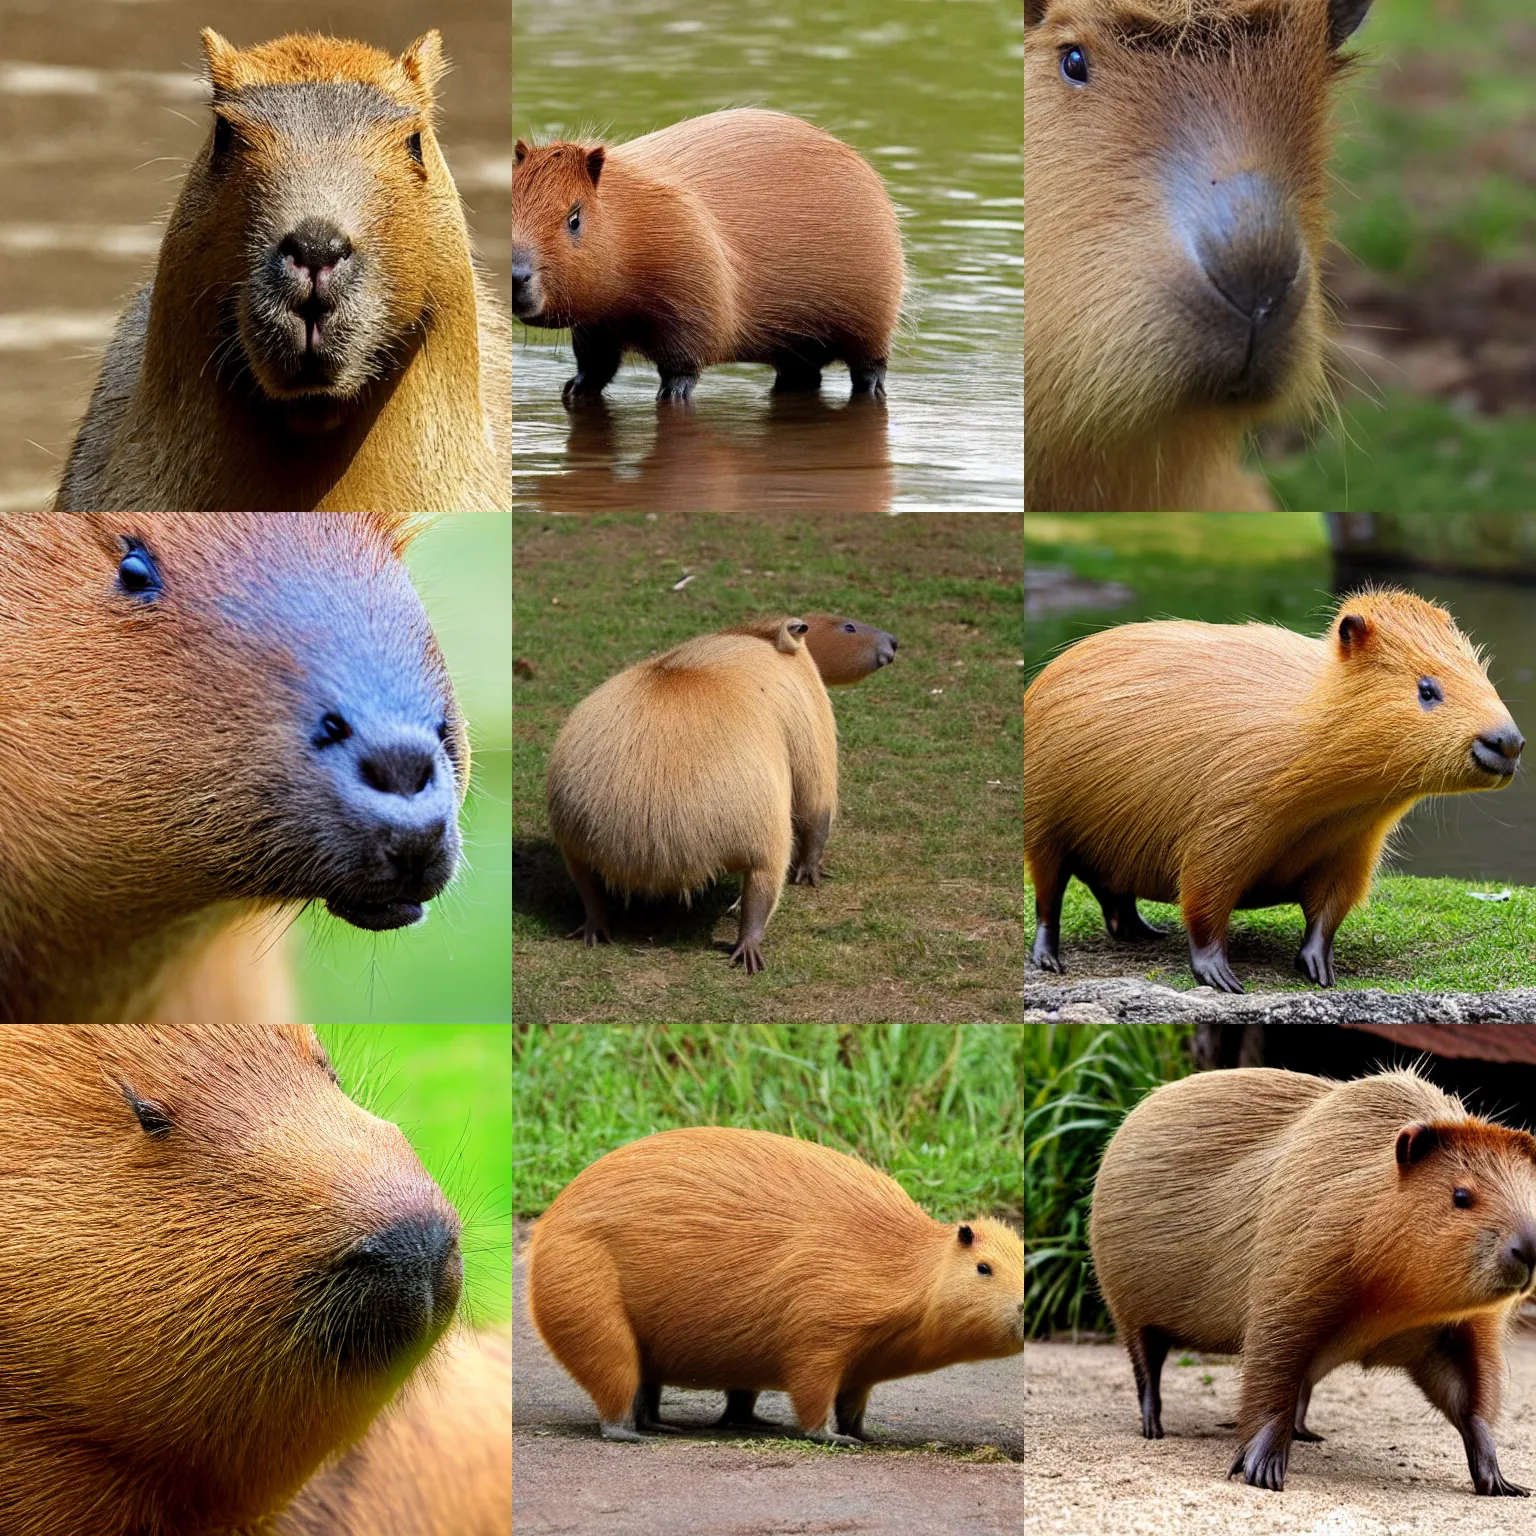 capybara3_4family_3yuさん4-29-10-